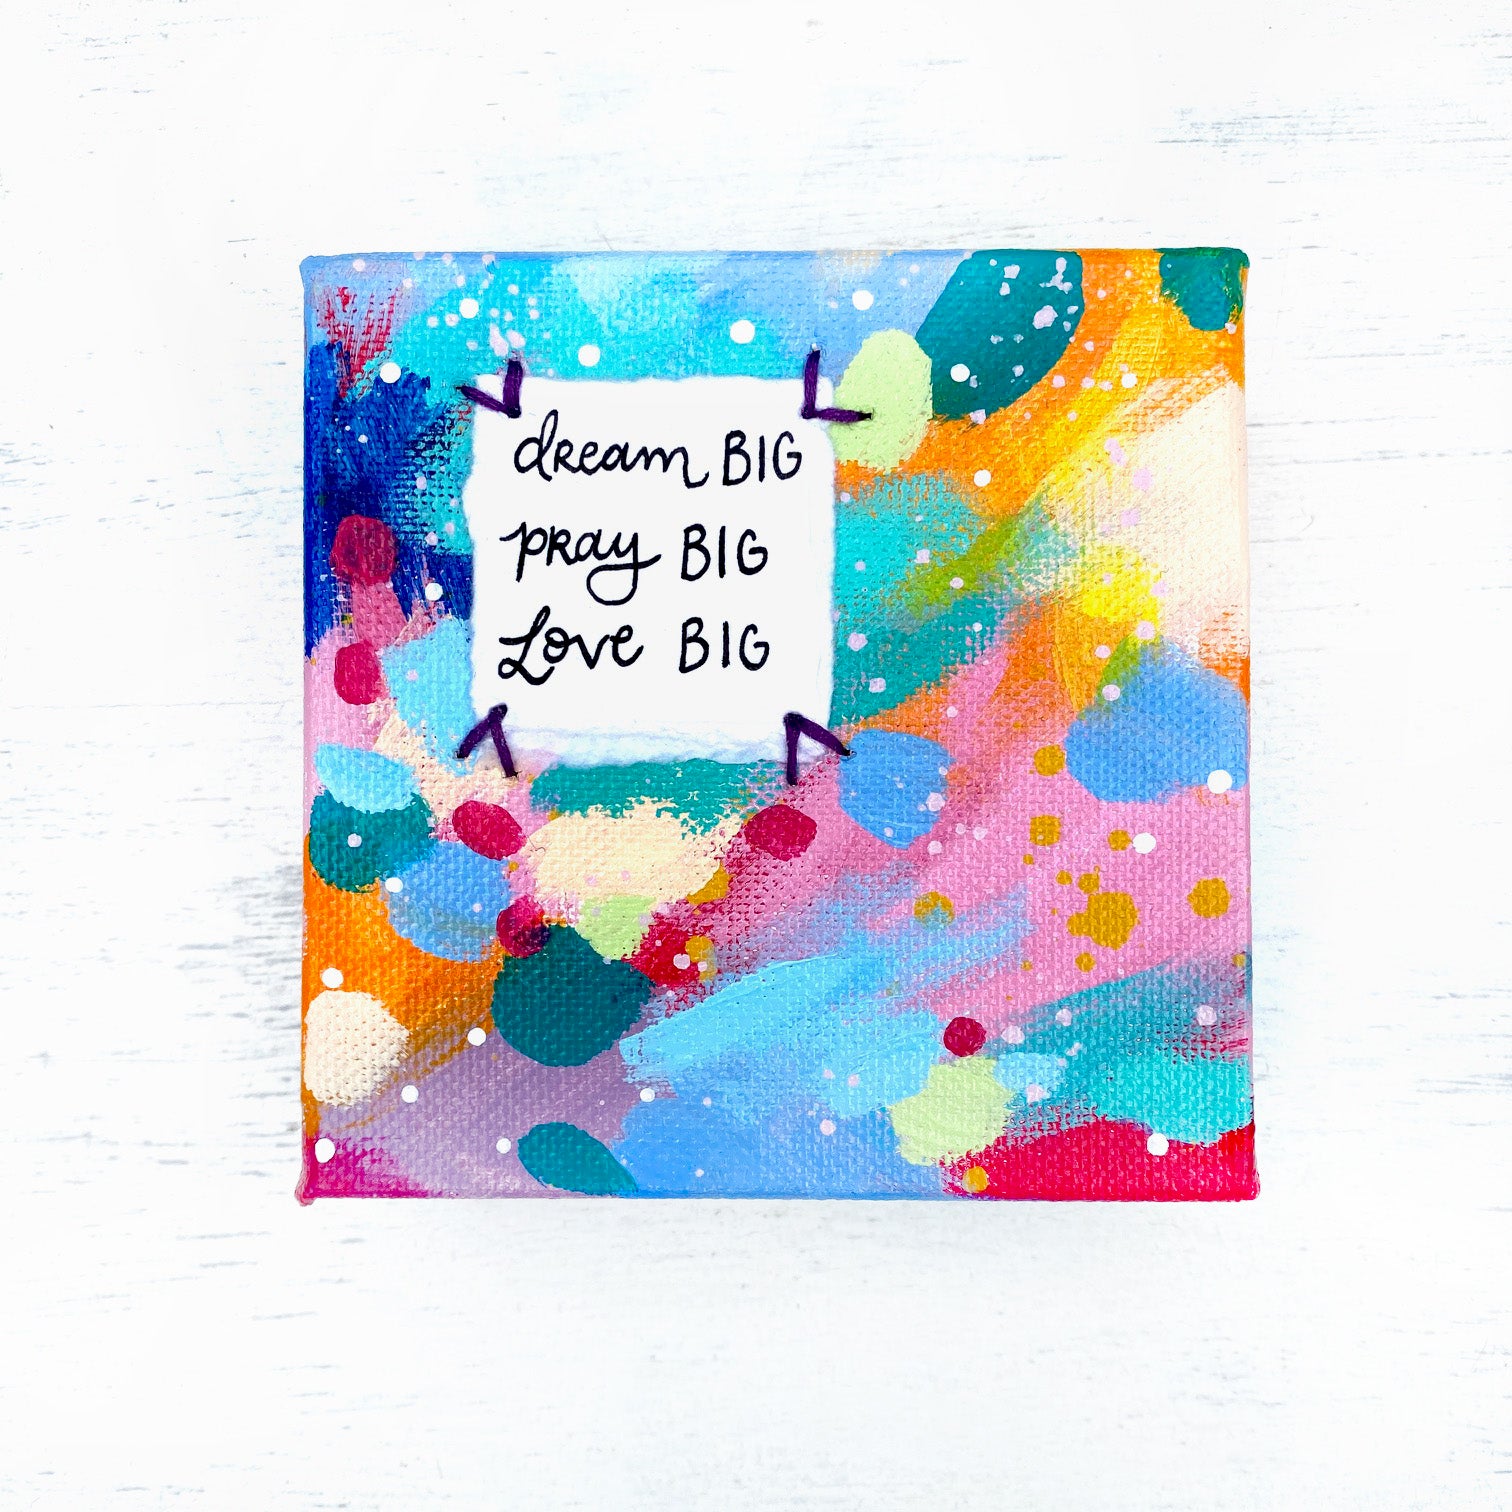 Dream Big, Pray Big, Love Big 4x4 inch original abstract canvas with embroidery thread accents - Bethany Joy Art